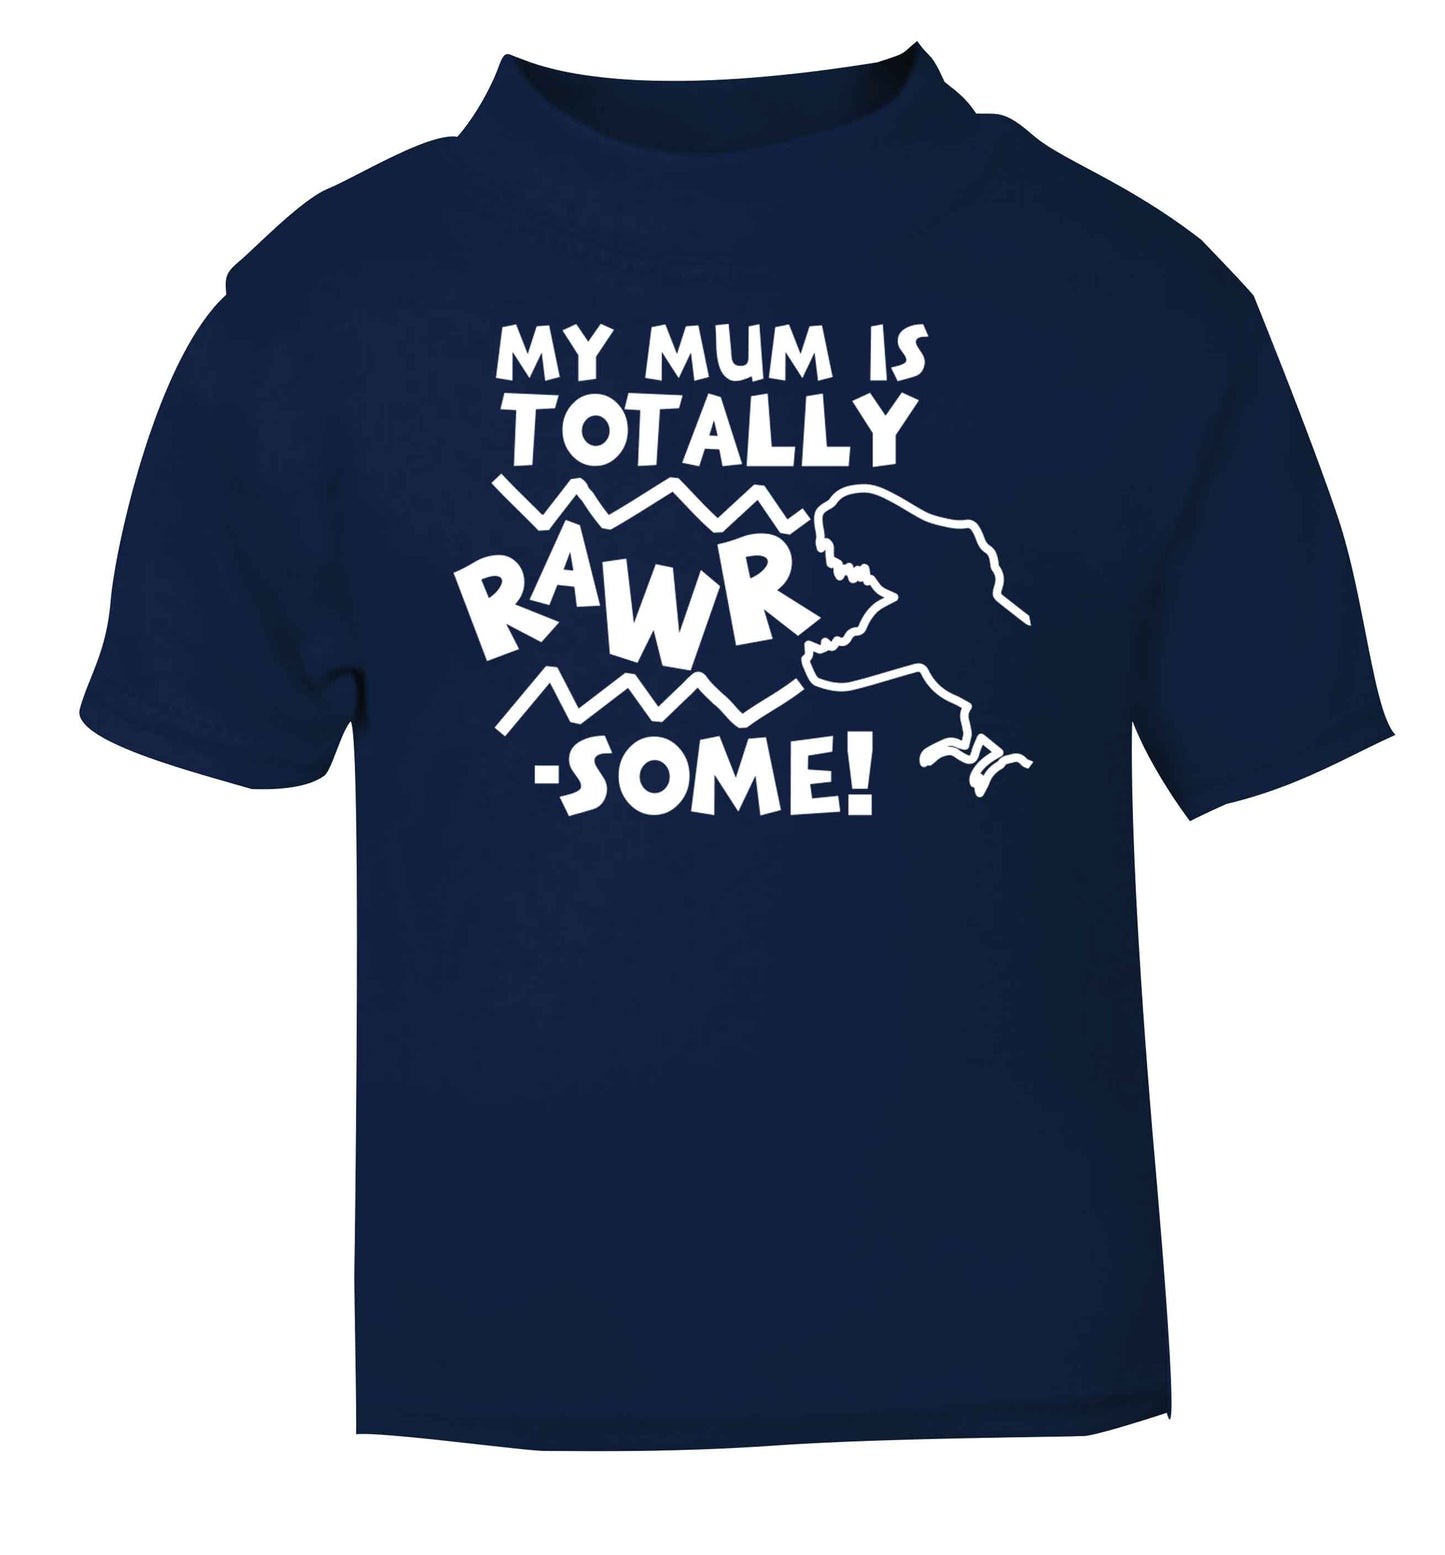 My mum is totally rawrsome navy baby toddler Tshirt 2 Years